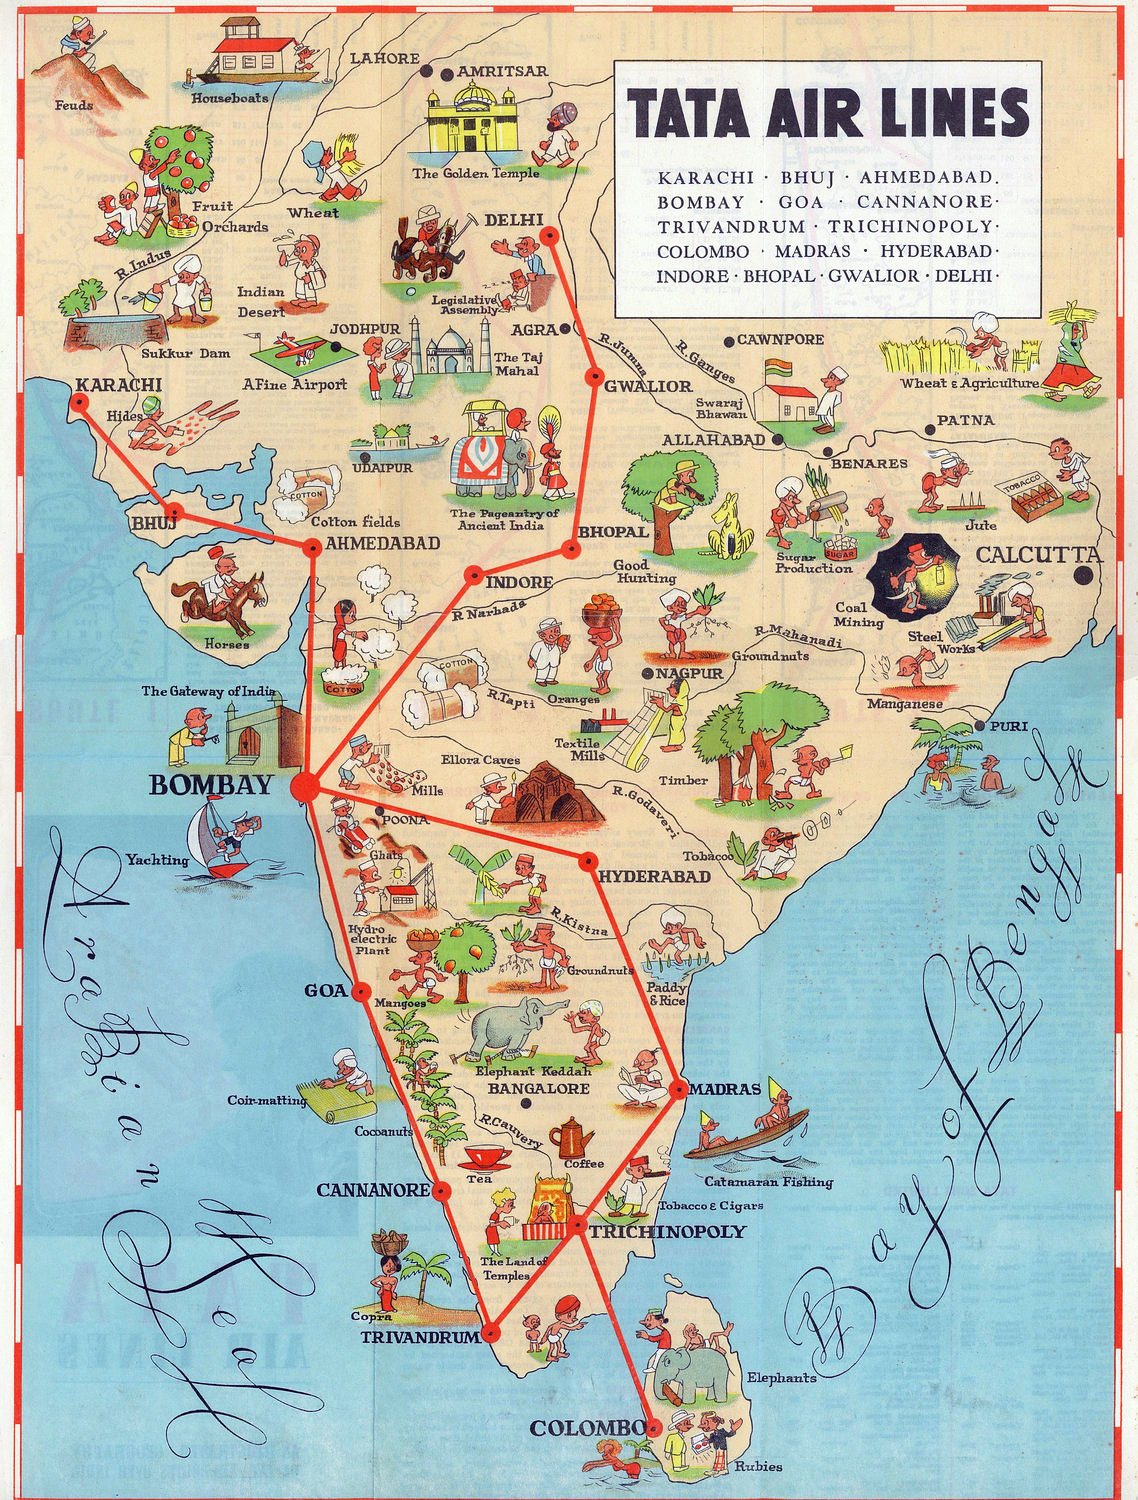 south india tourist map pdf